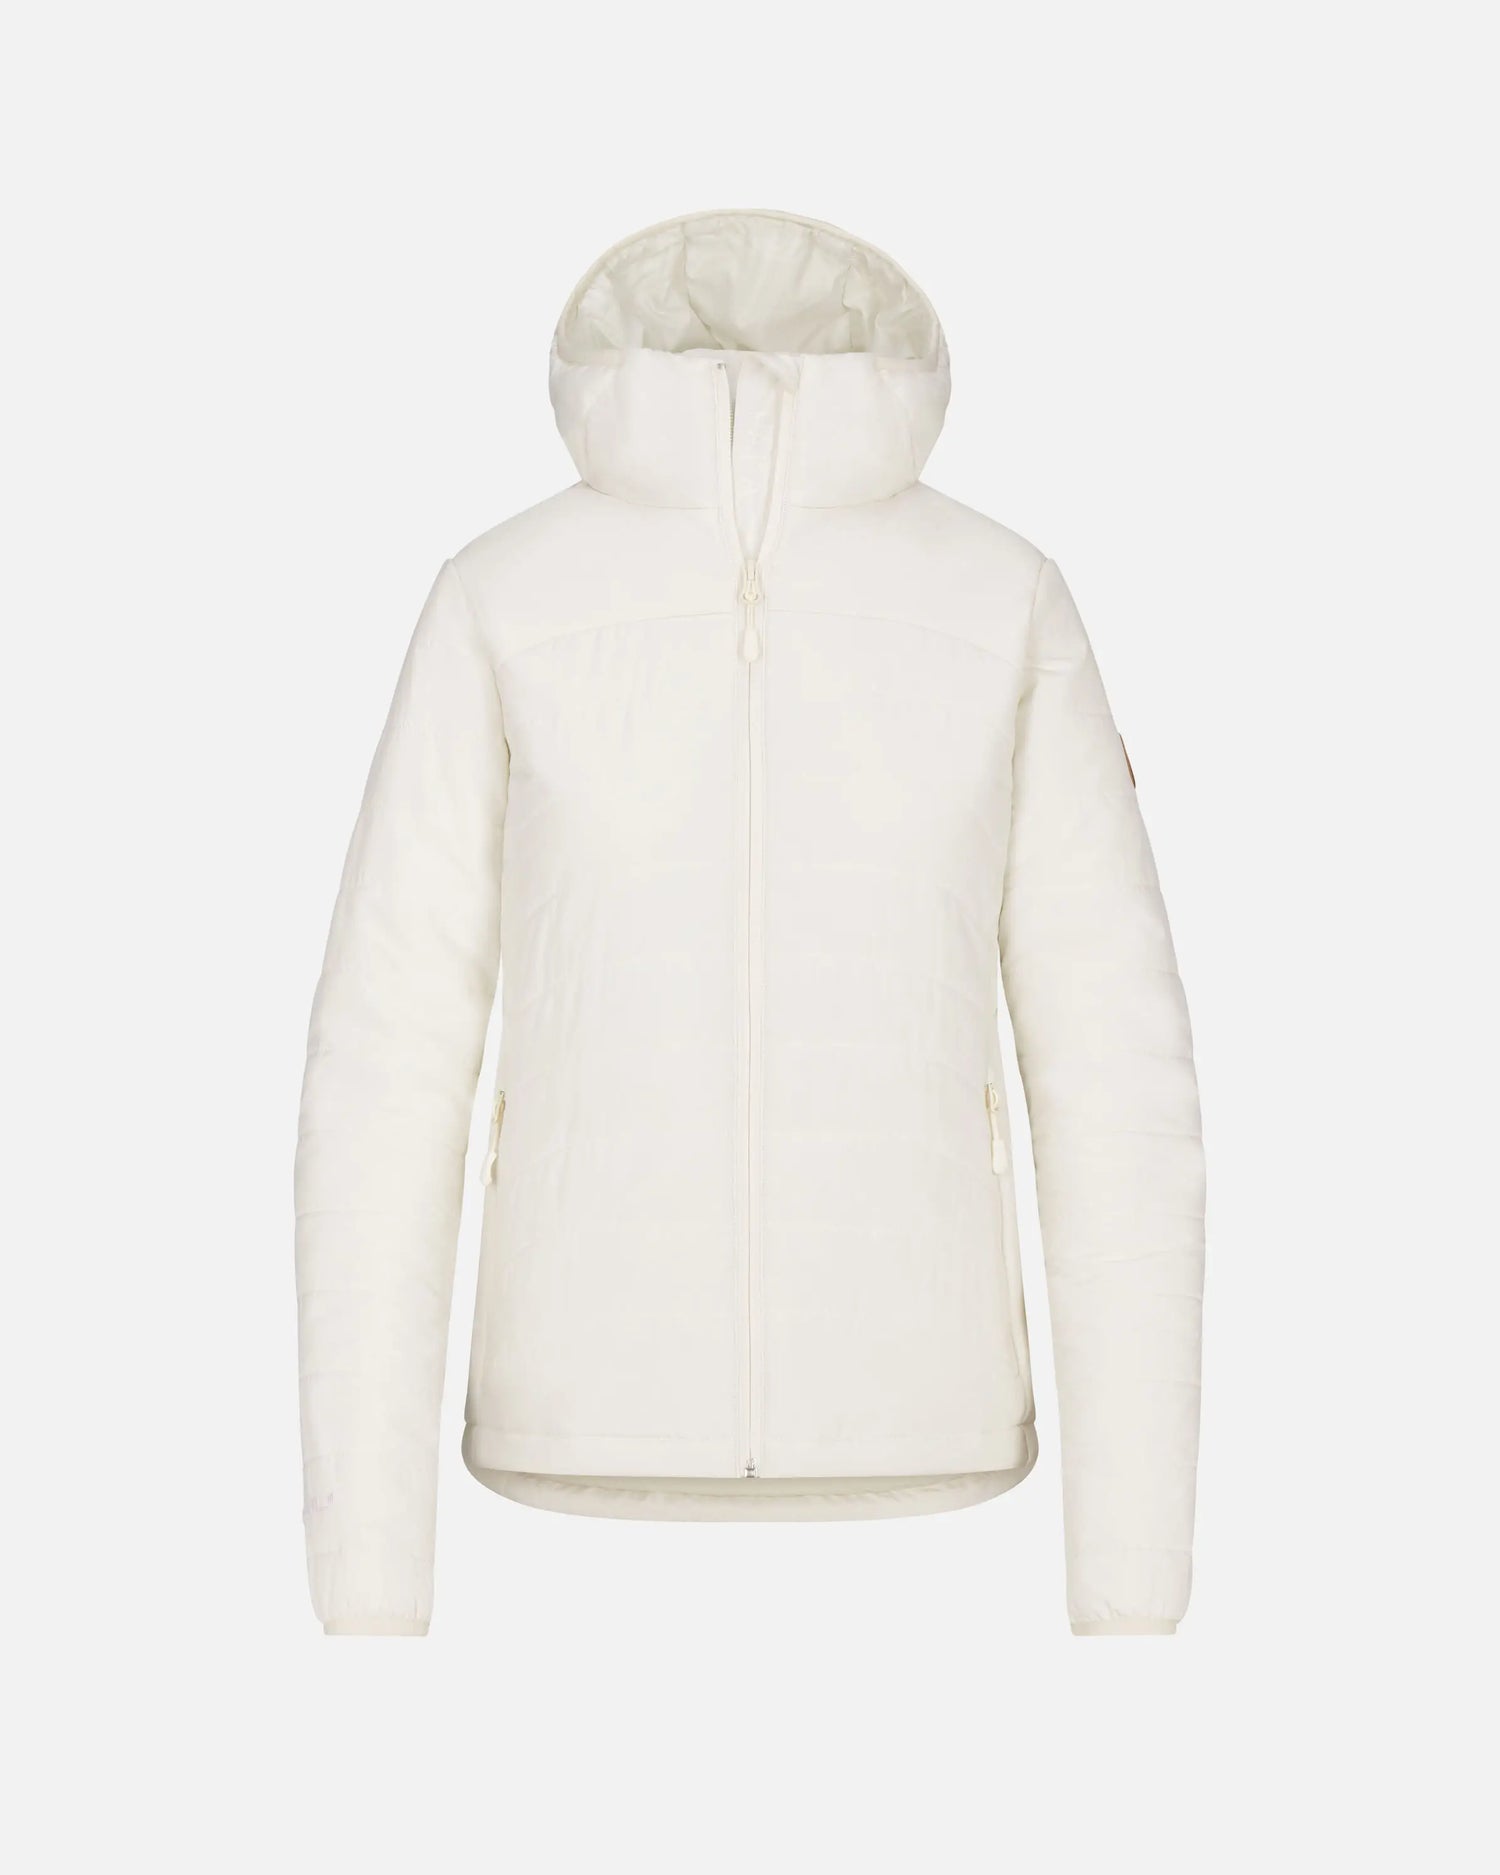 Avalanche Women's Lightweight Jacket With Convertible Hood and Zipper  Pockets